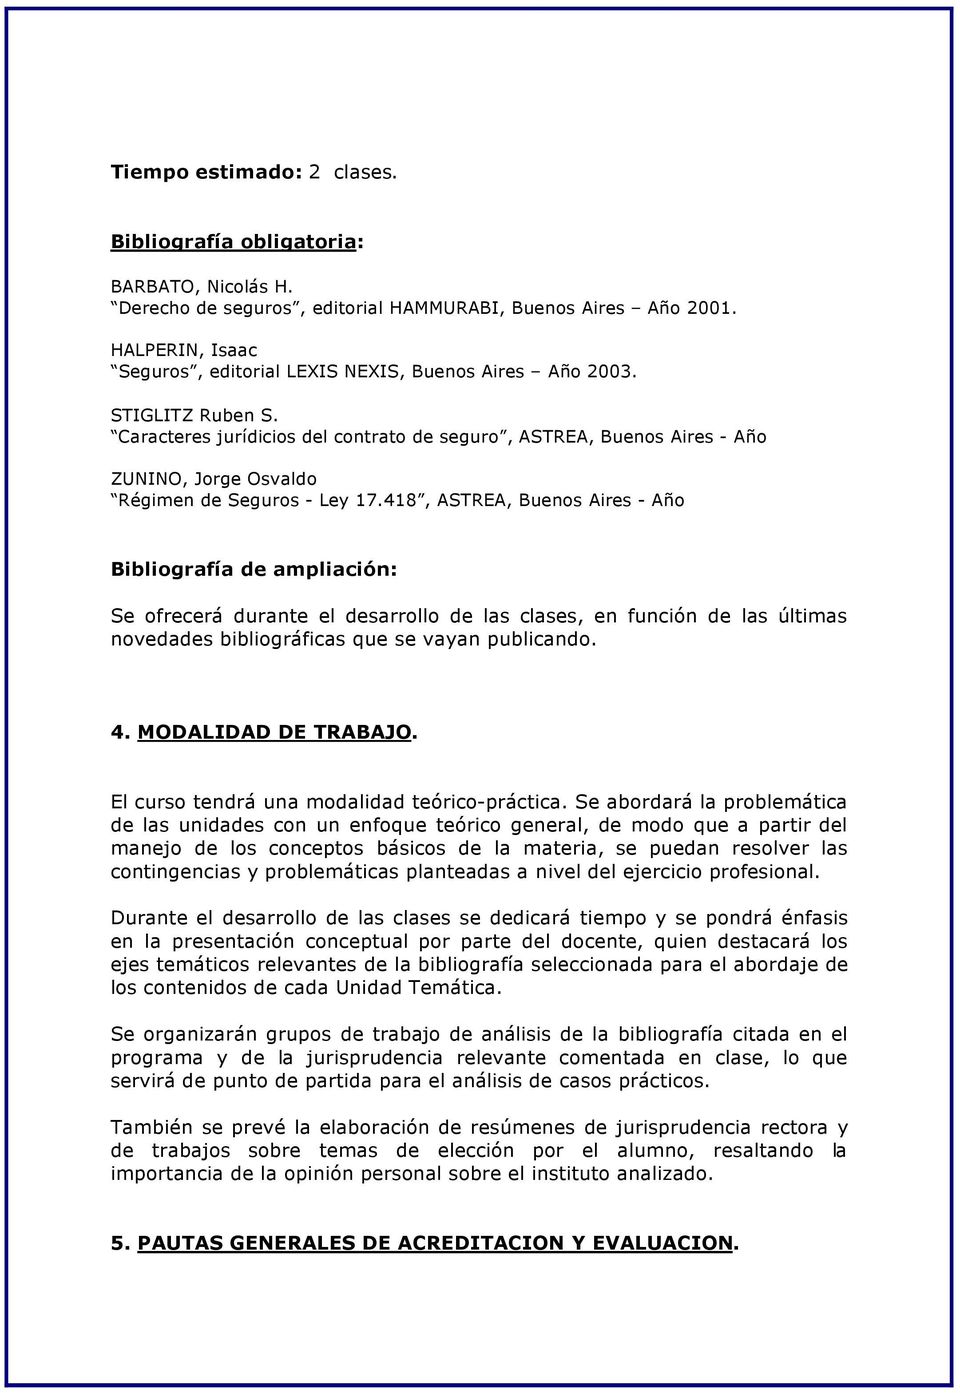 Caracteres jurádicios del contrato de seguro, ASTREA, Buenos Aires - AÅo ZUNINO, Jorge Osvaldo RÖgimen de Seguros - Ley 17.